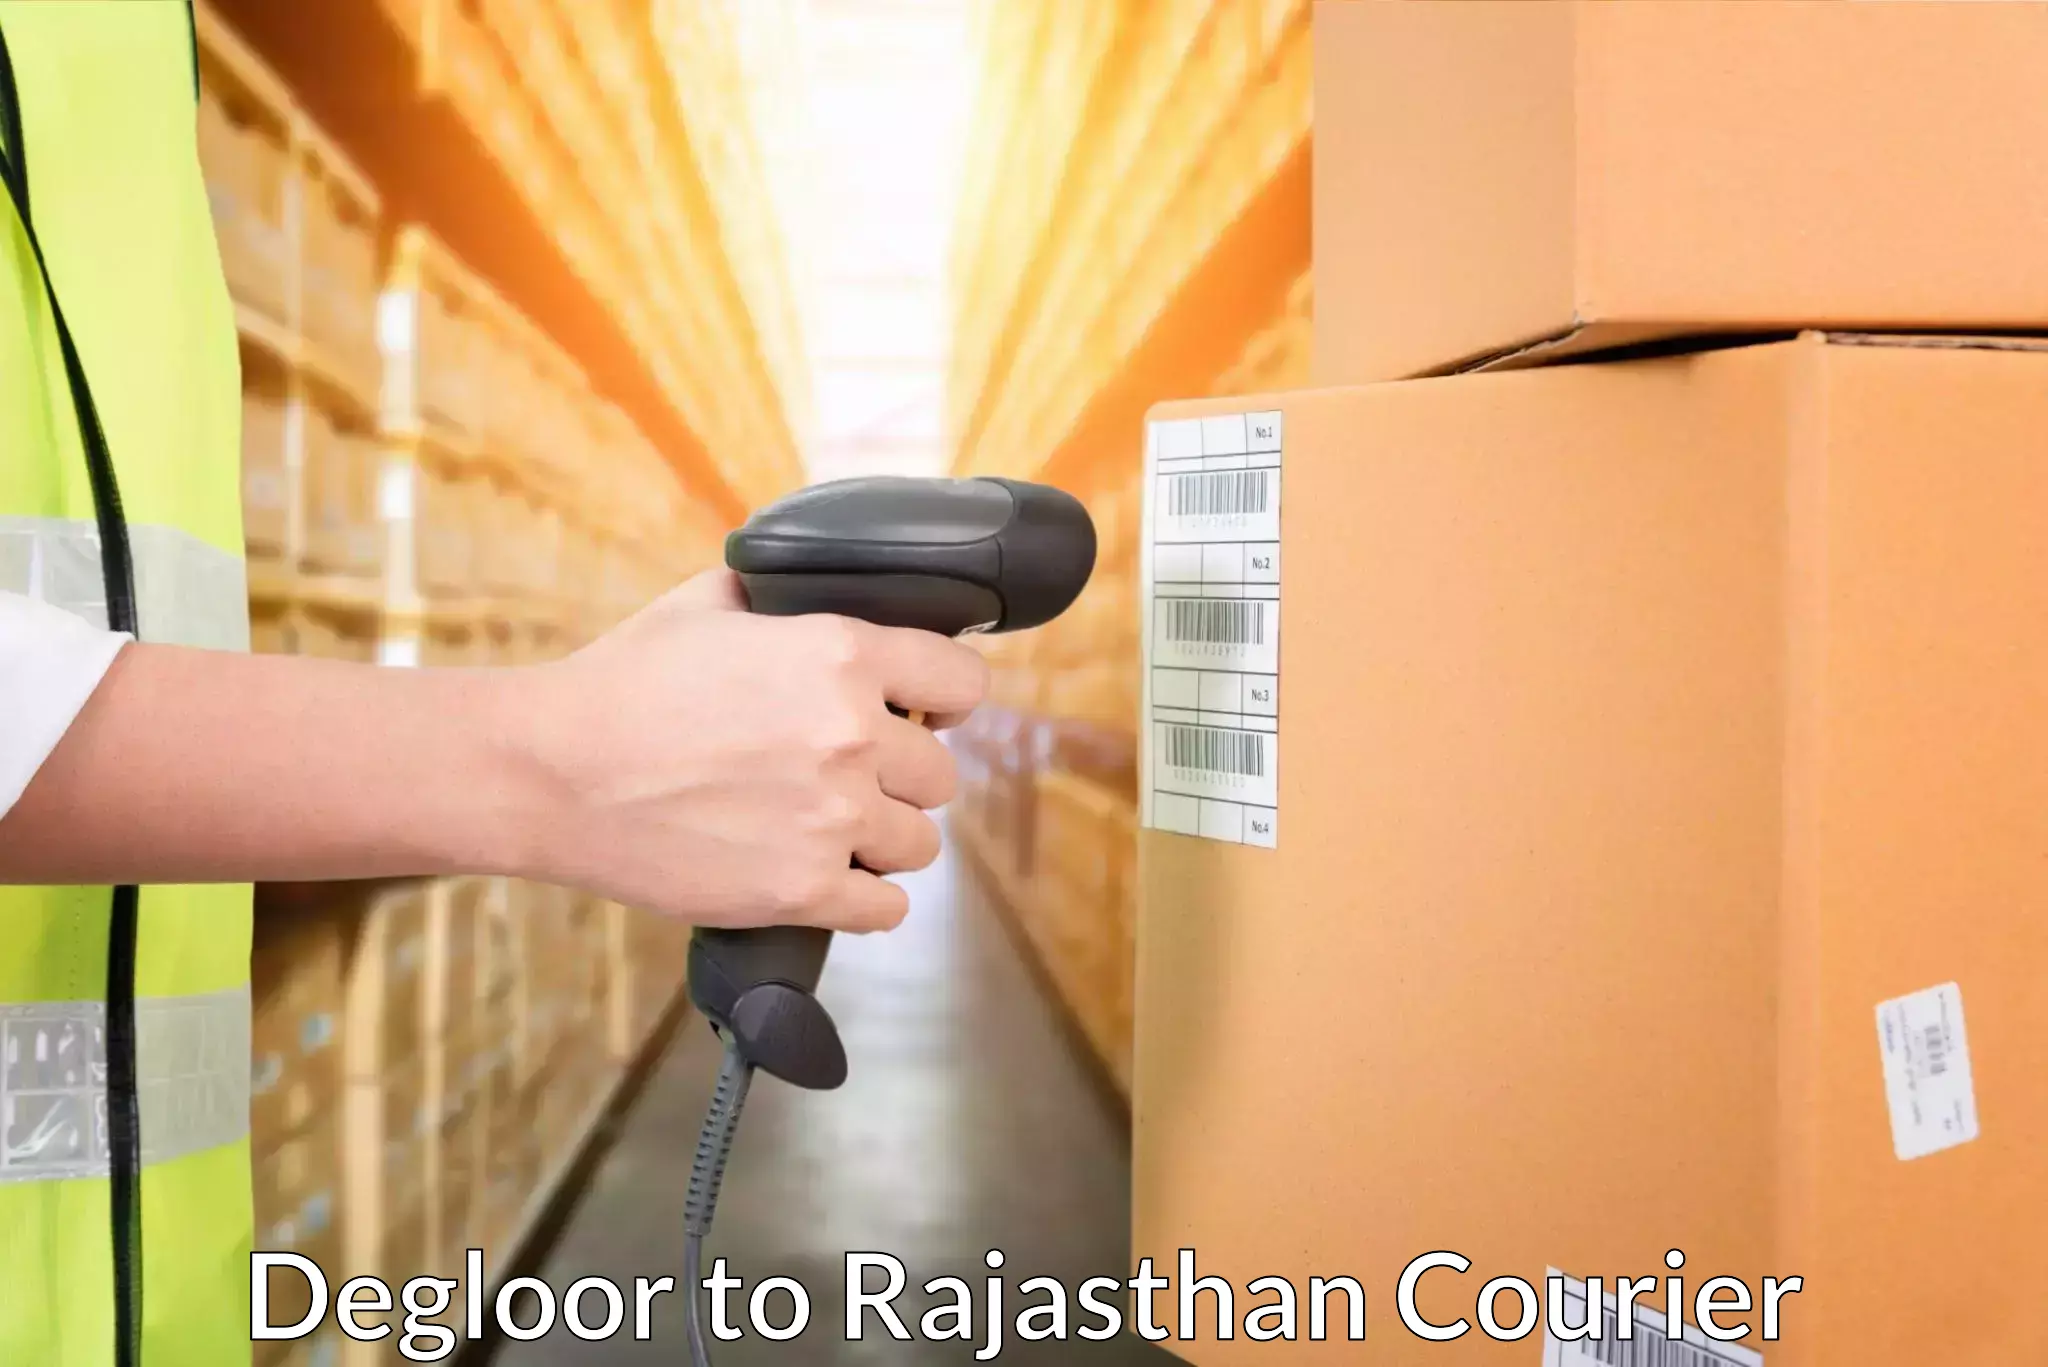 High-performance logistics Degloor to Jodhpur